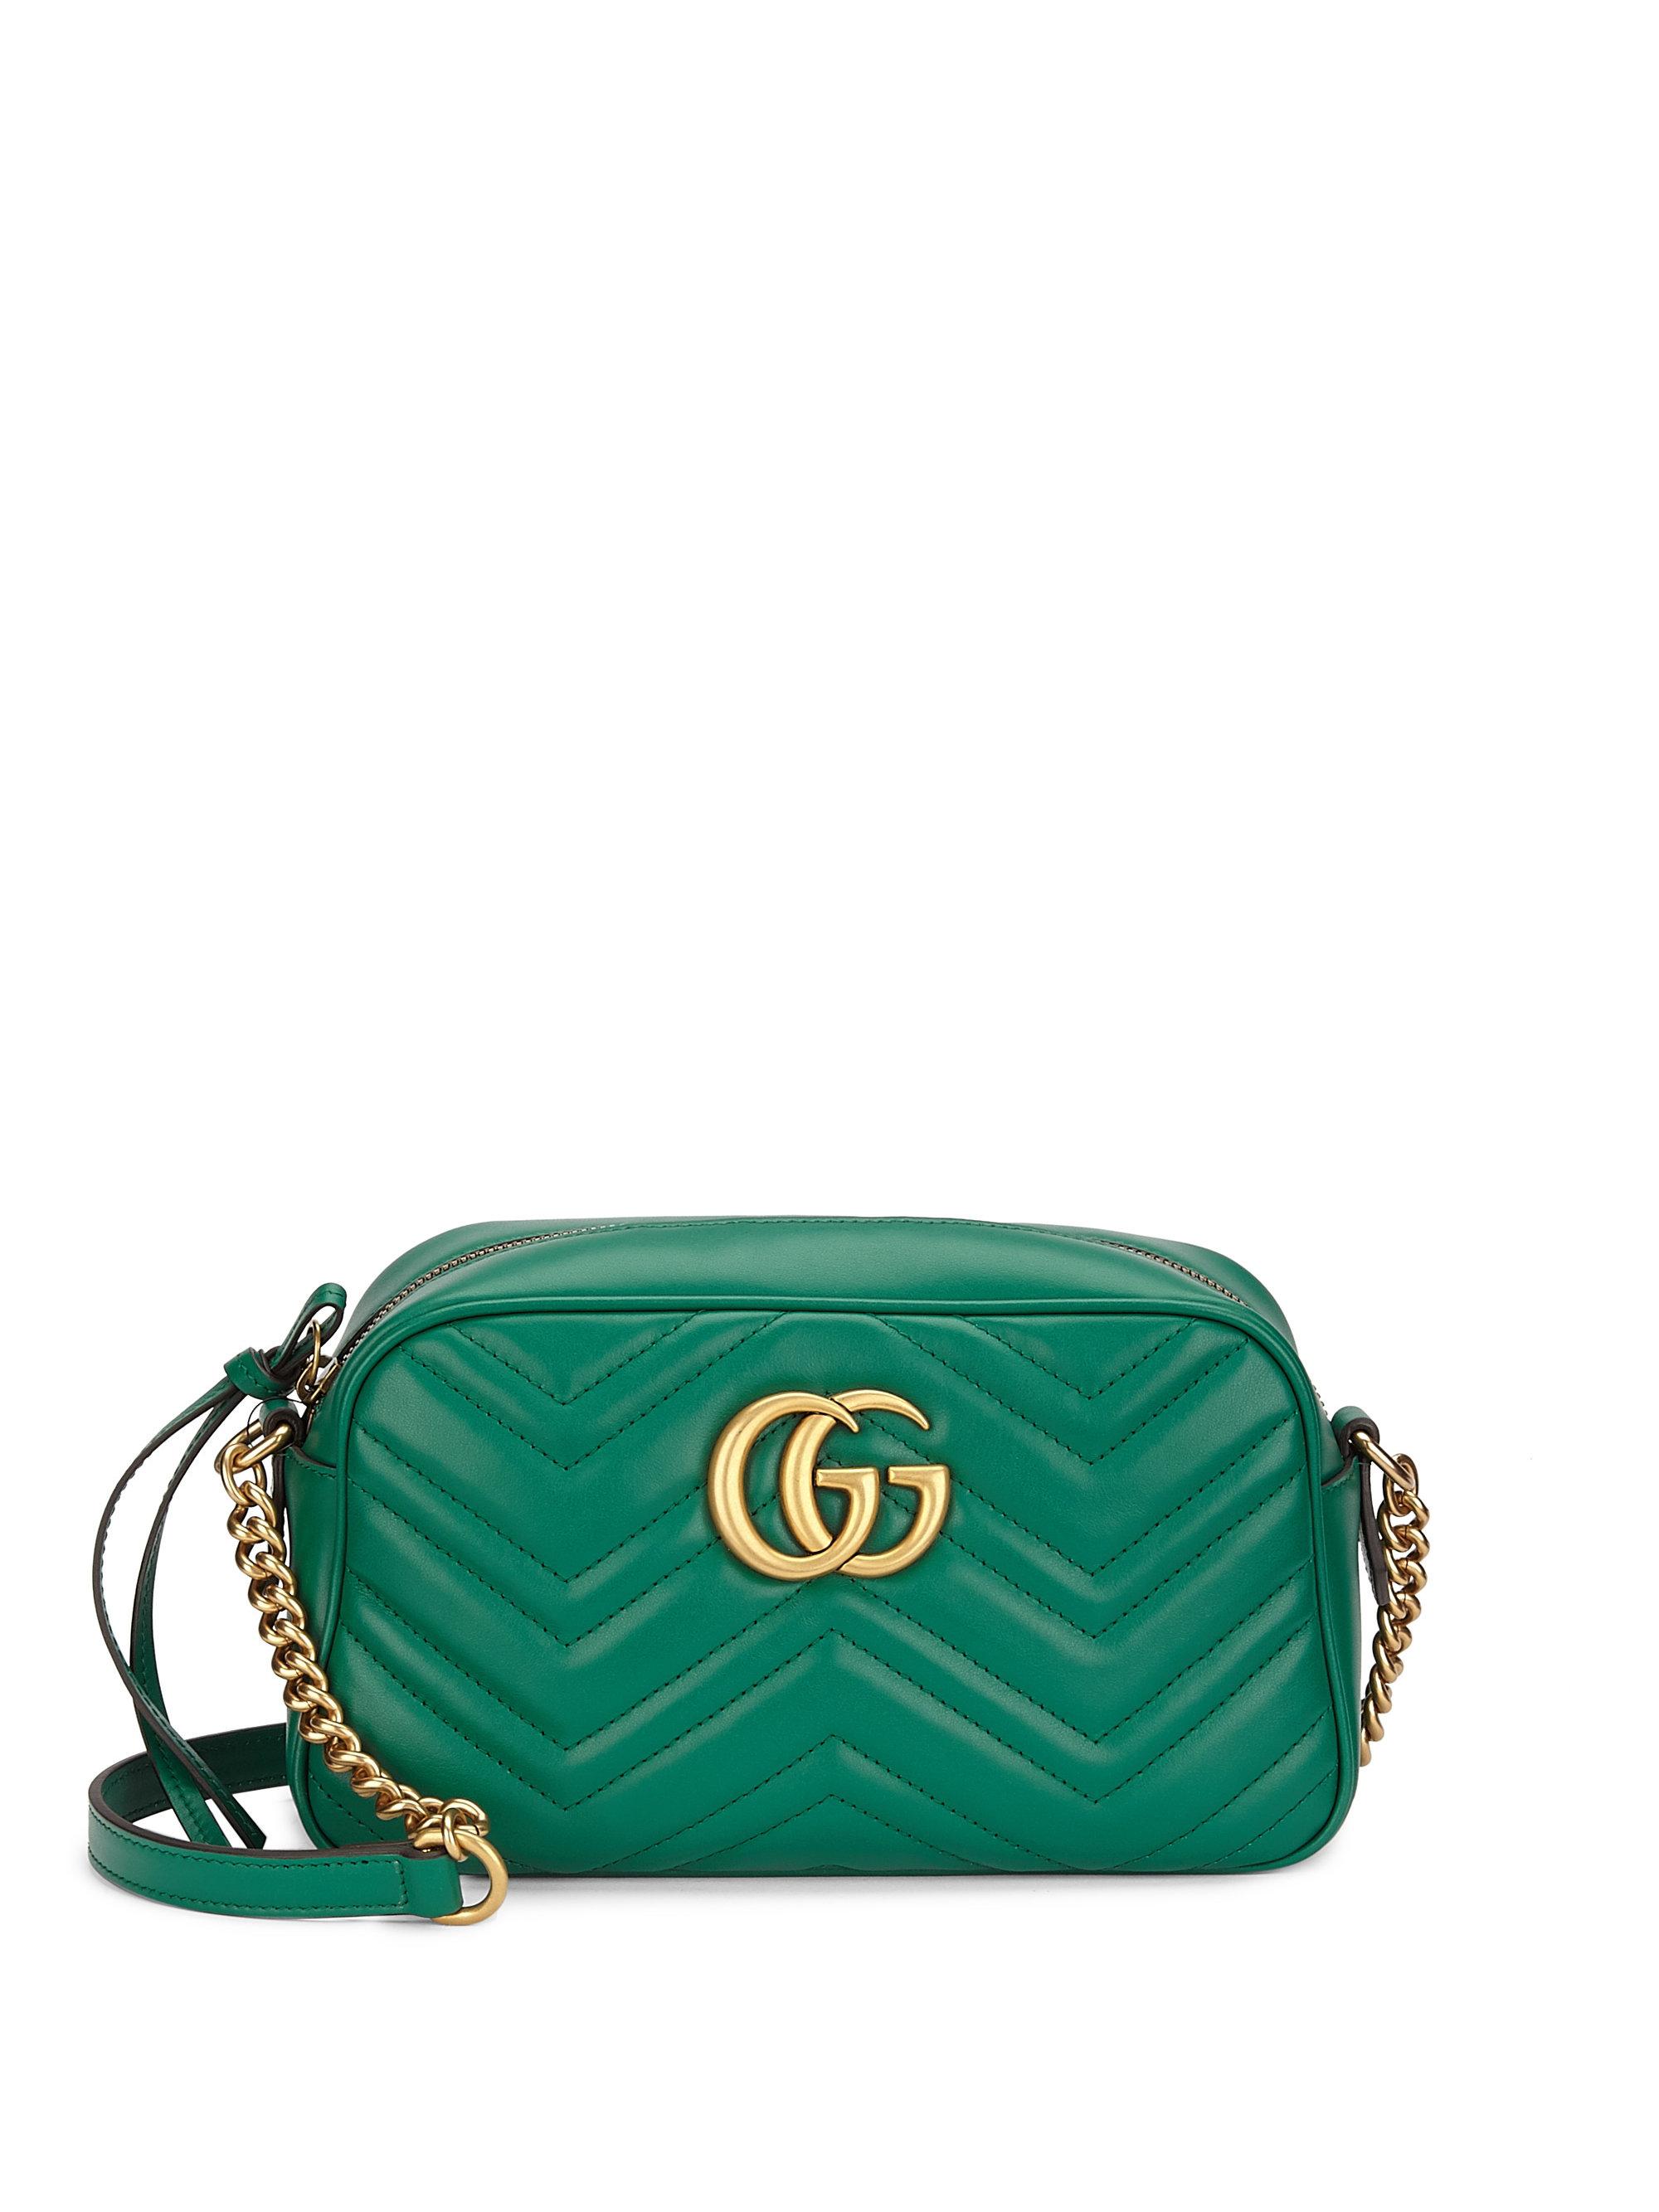 Gucci Gg Marmont Small Matelassé Shoulder Bag in Emerald (Green) - Lyst